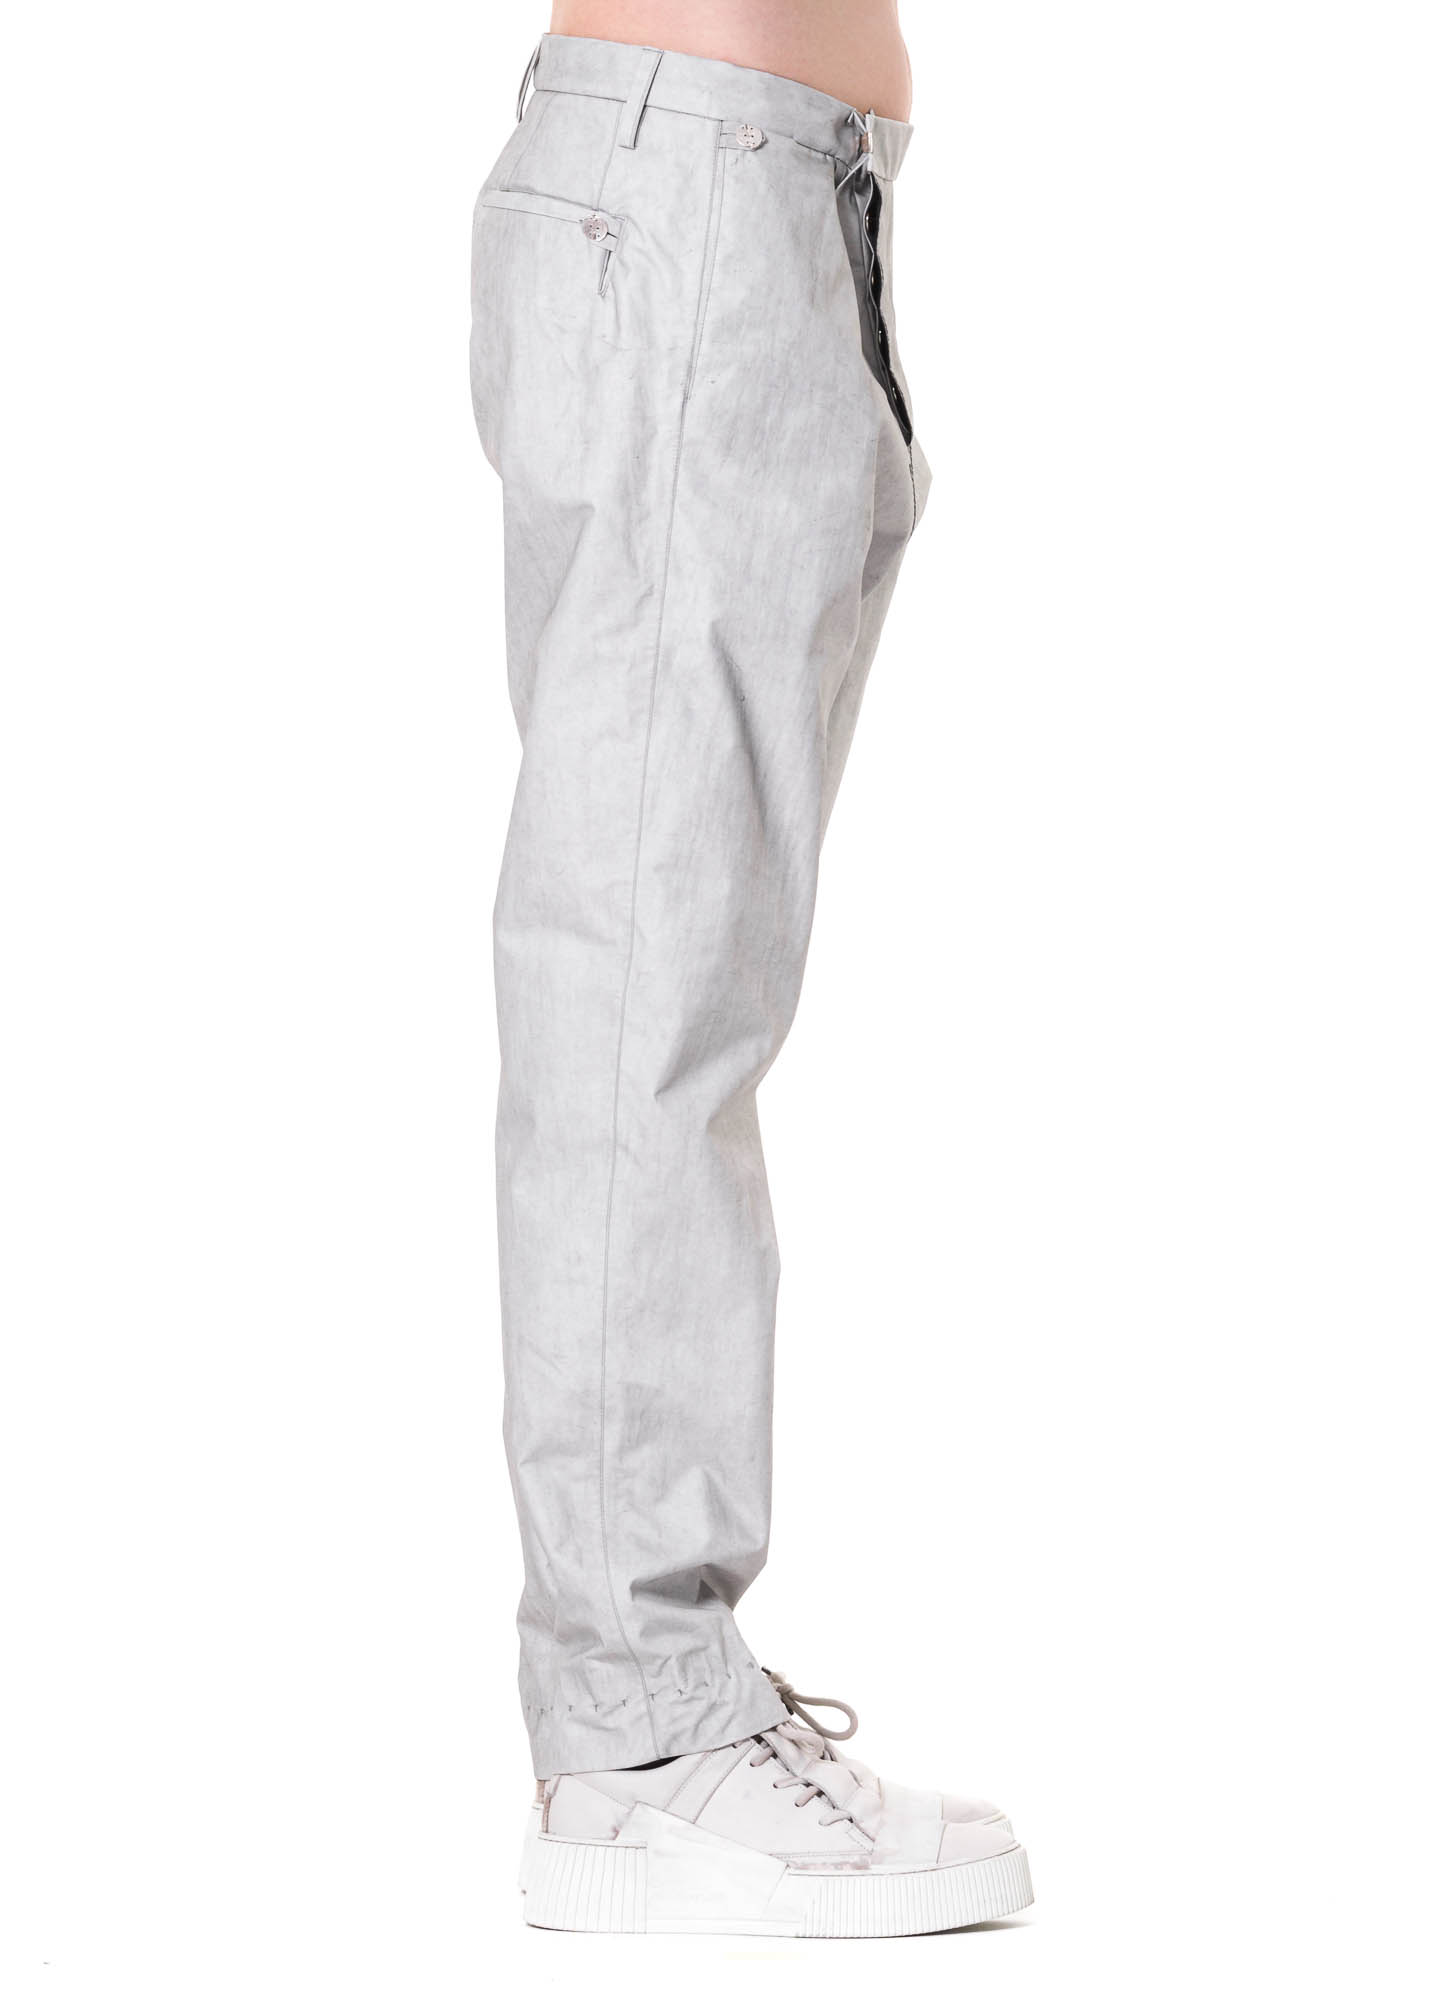 https://www.hide-m.com/wp-content/uploads/2023/05/Taichi-Murakami-Men-L-P-LC-Trousers-Origami-Pants-Herren-Hose-3-layer-nylon-waterproof-dusty-white-hide-m-4.jpg